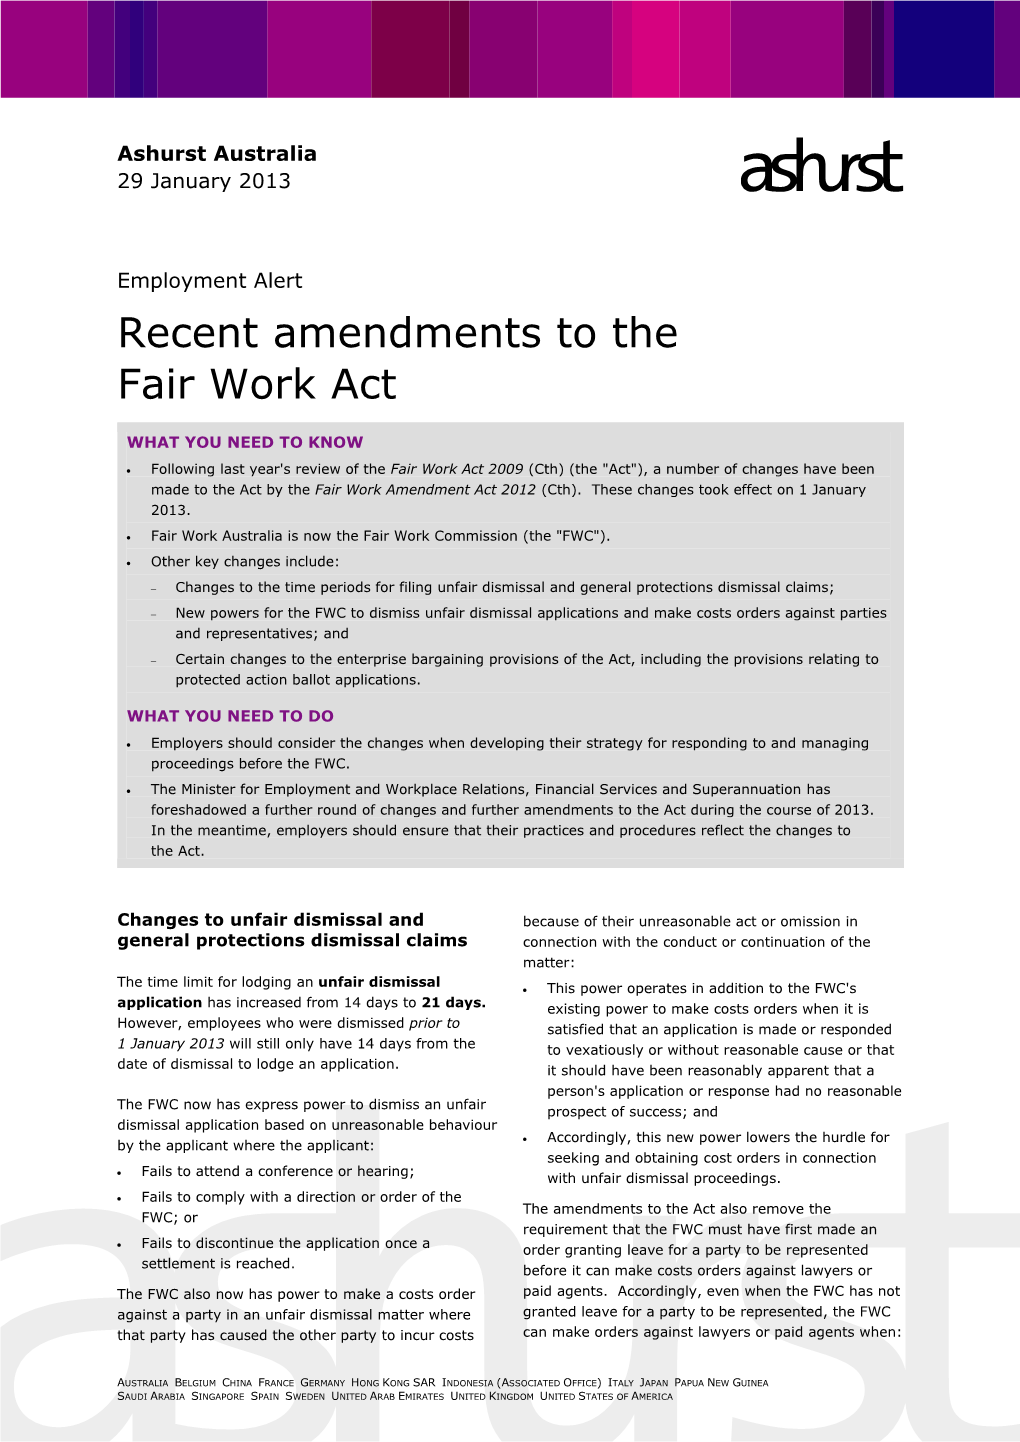 Recent Amendments to the Fair Work Act